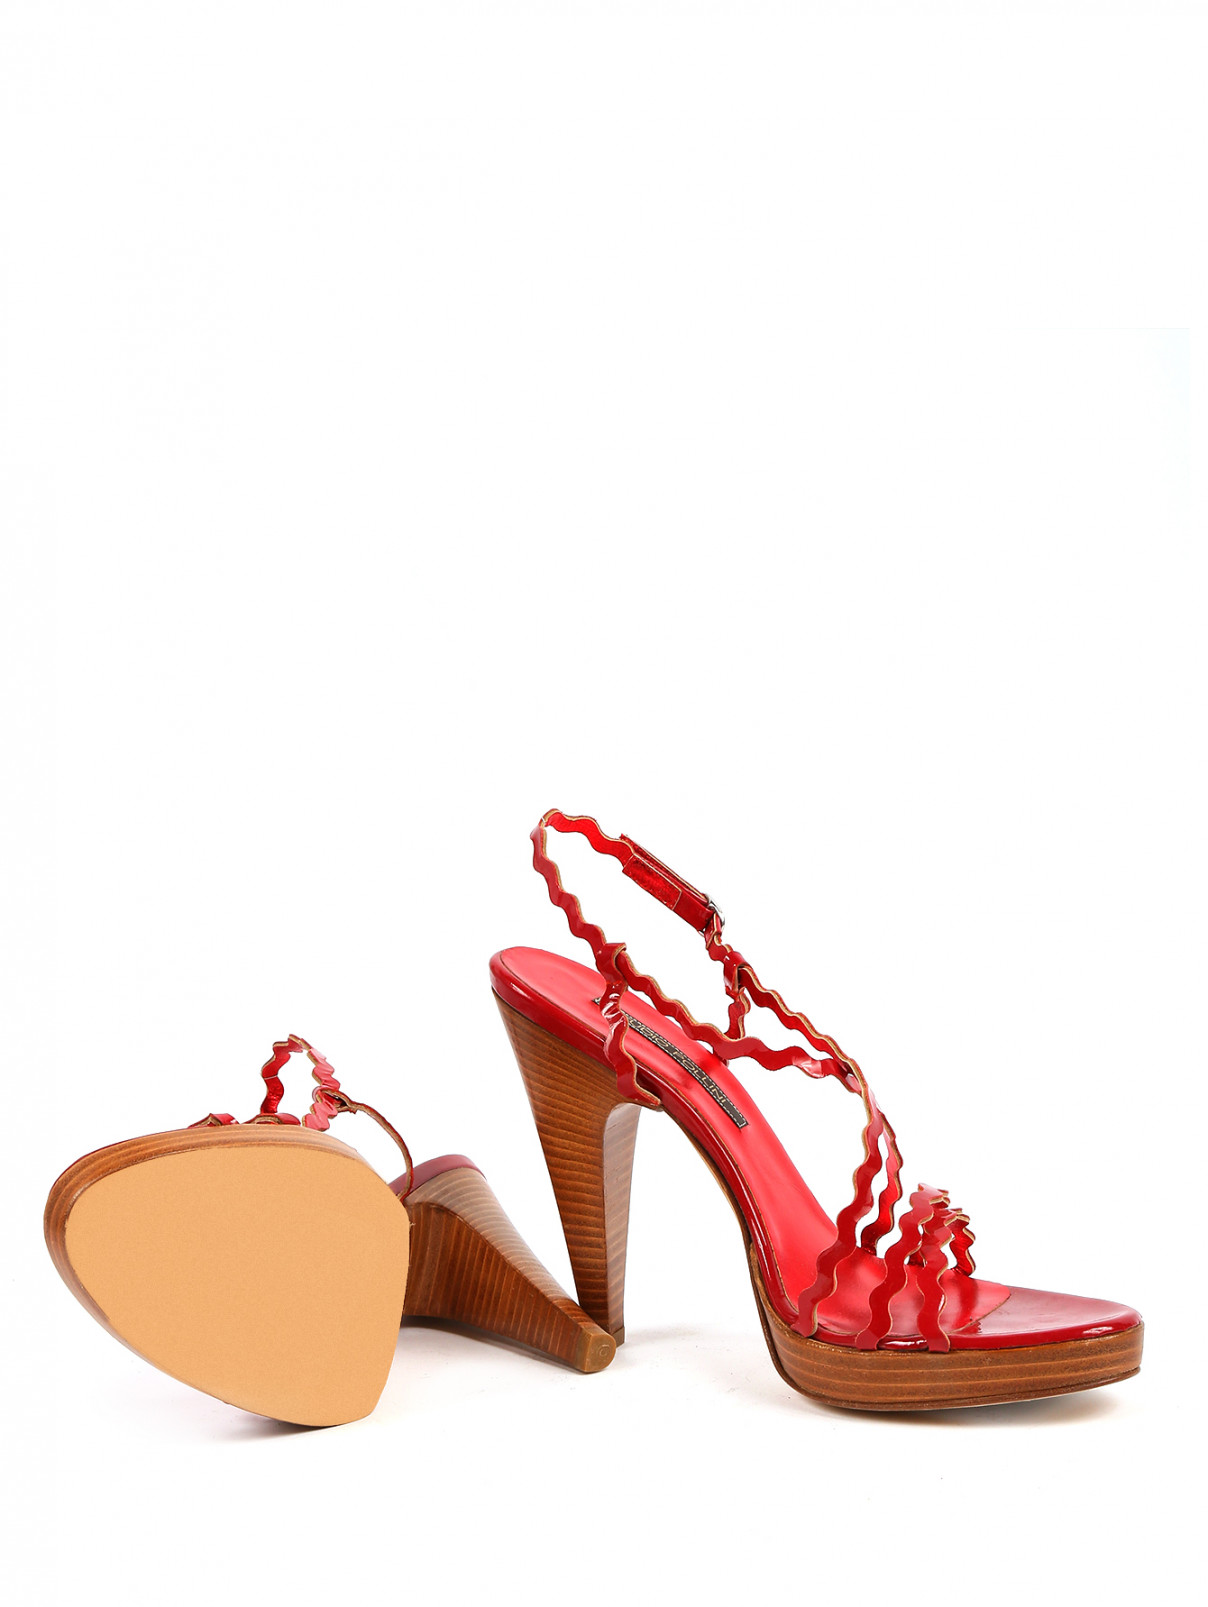 Босоножки из кожи на платформе и устойчивом каблуке Studio Pollini  –  Обтравка5  – Цвет:  Красный